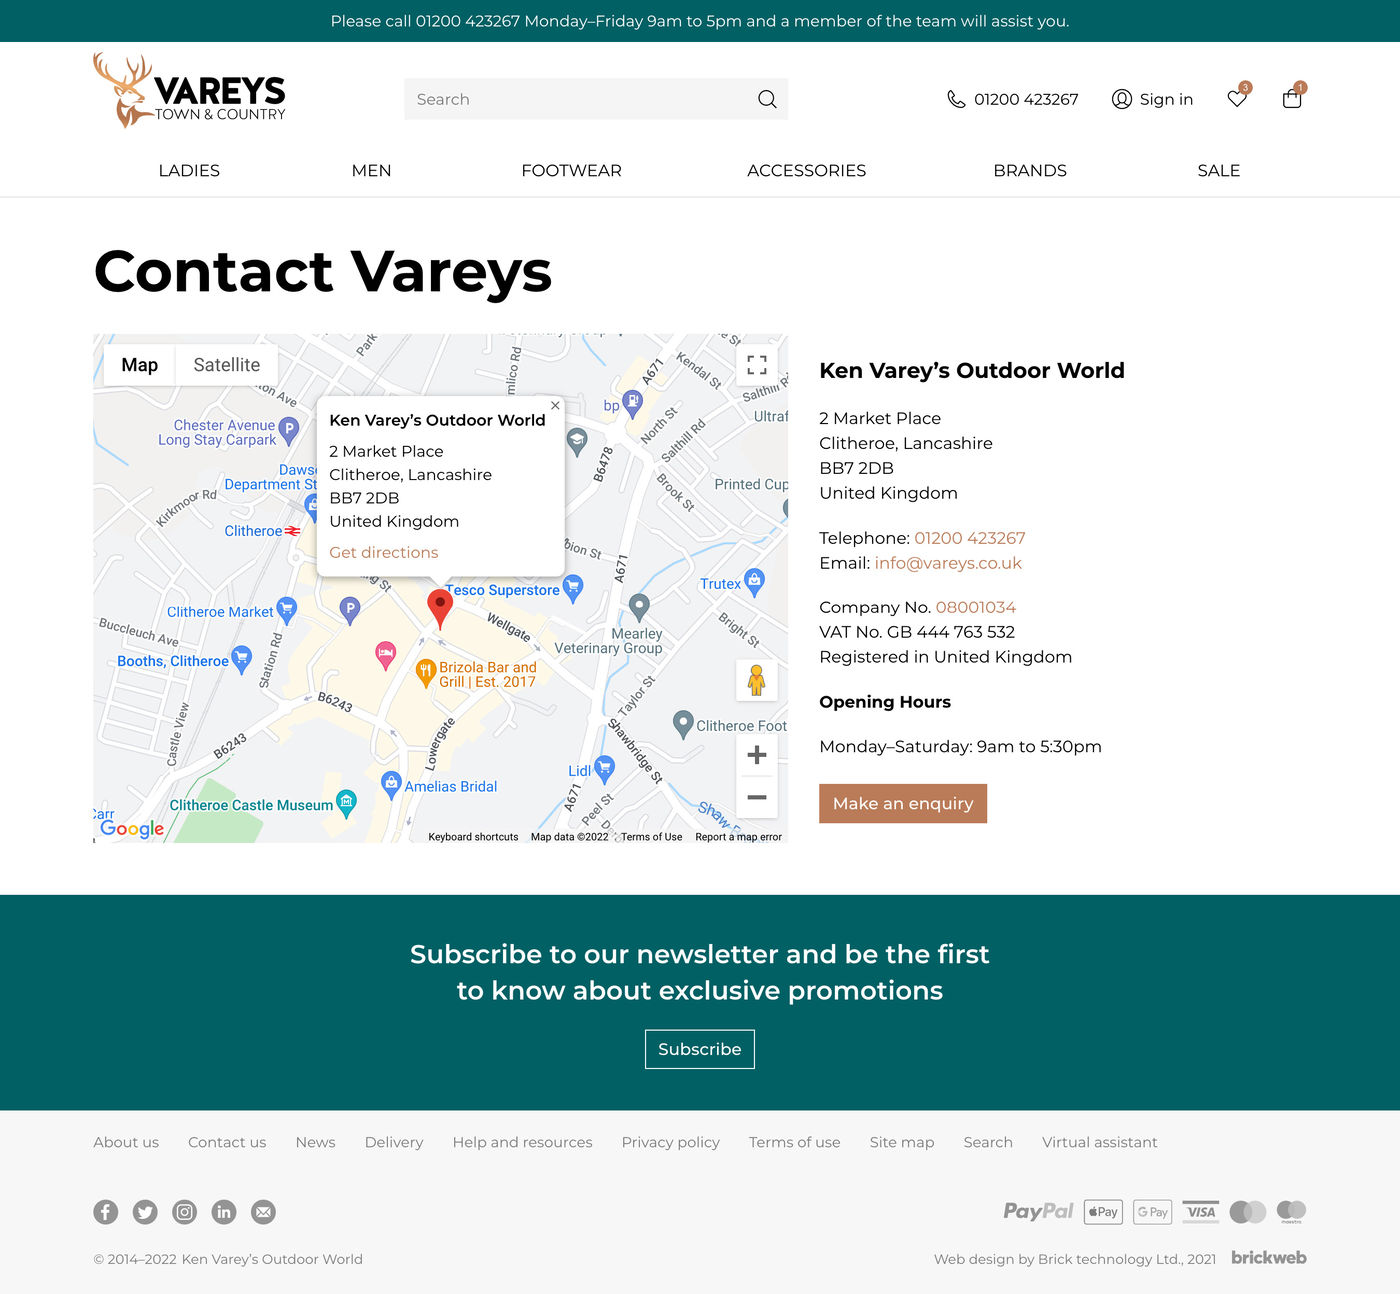 Vareys Town & Country Contact us